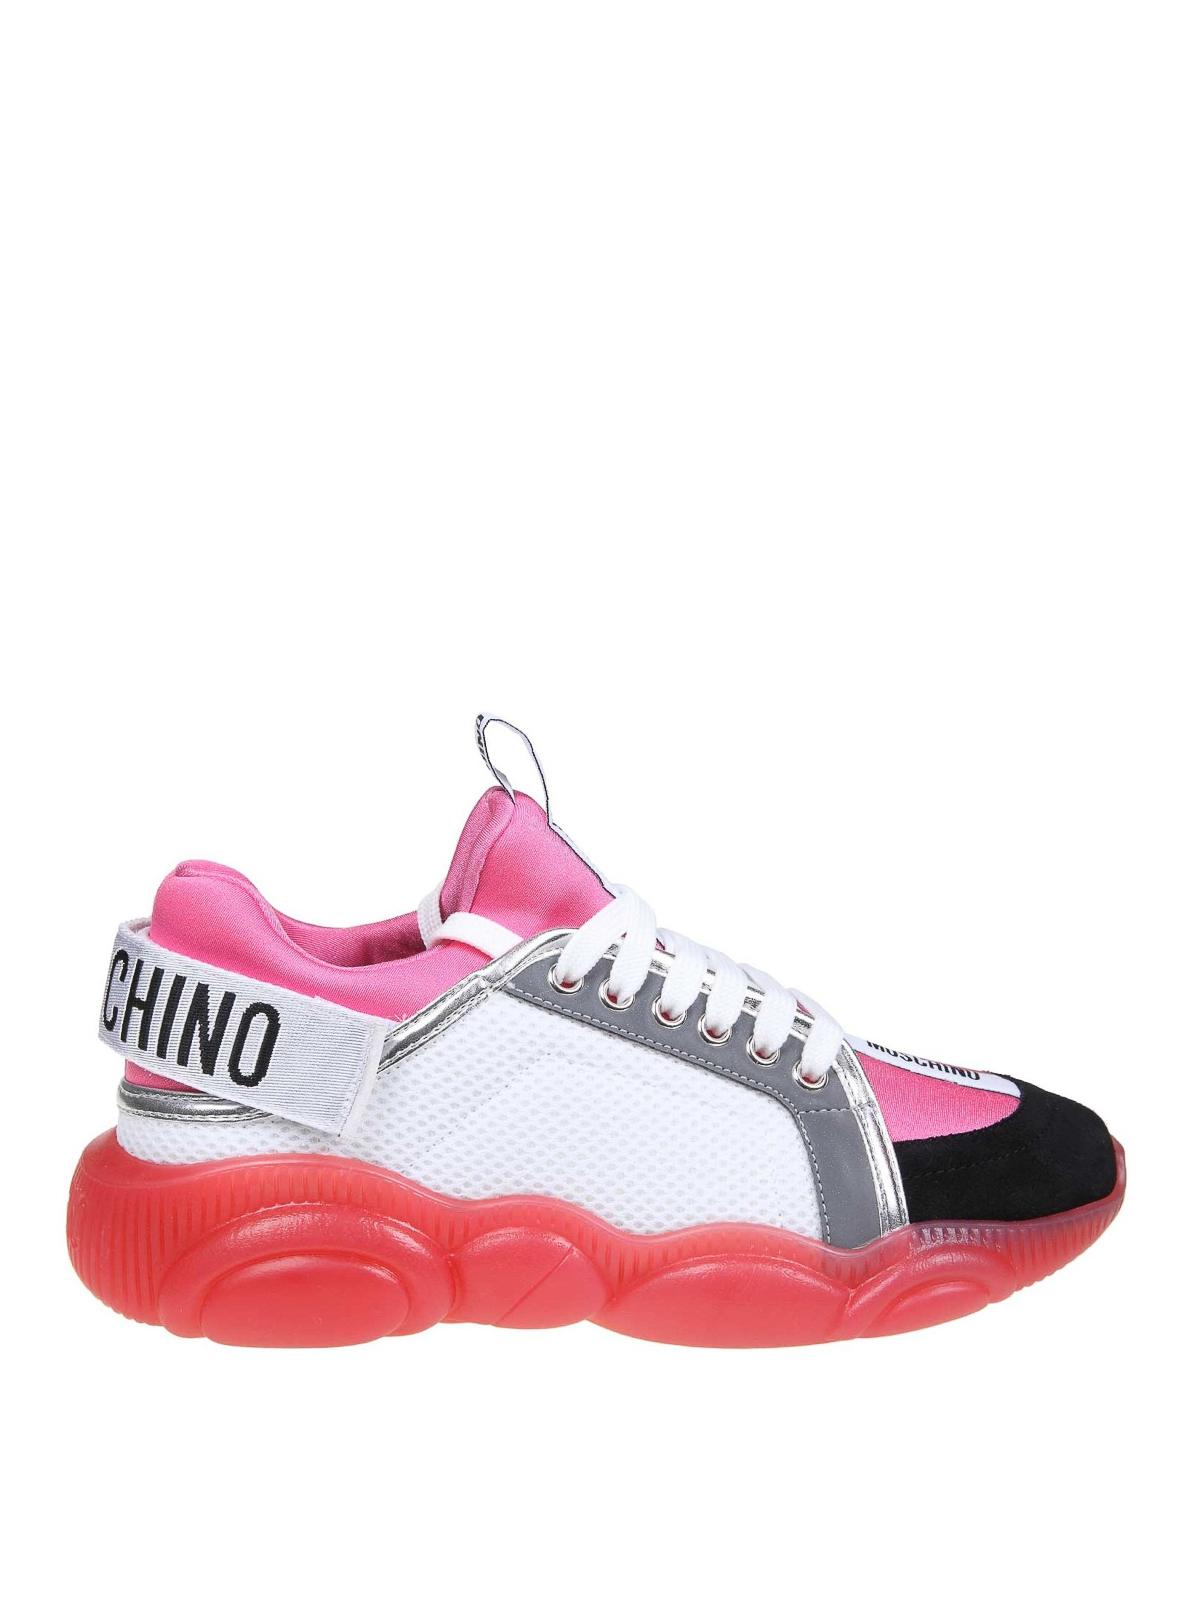 Moschino - Teddy Run pink sneakers 